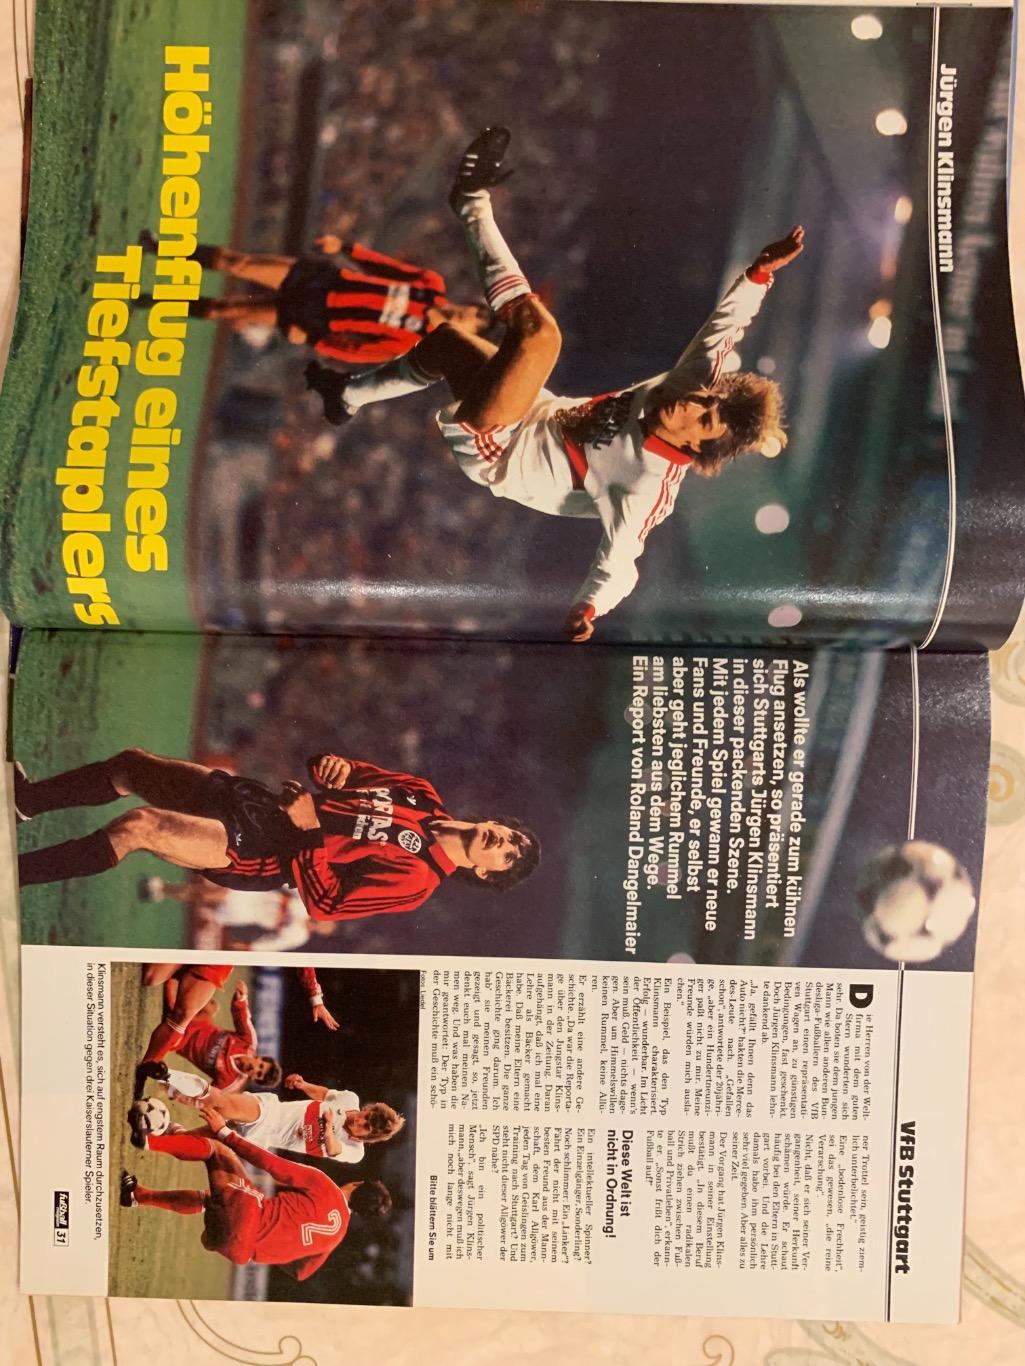 Kicker 3/1985-сборная Германии -/олаф тон 3